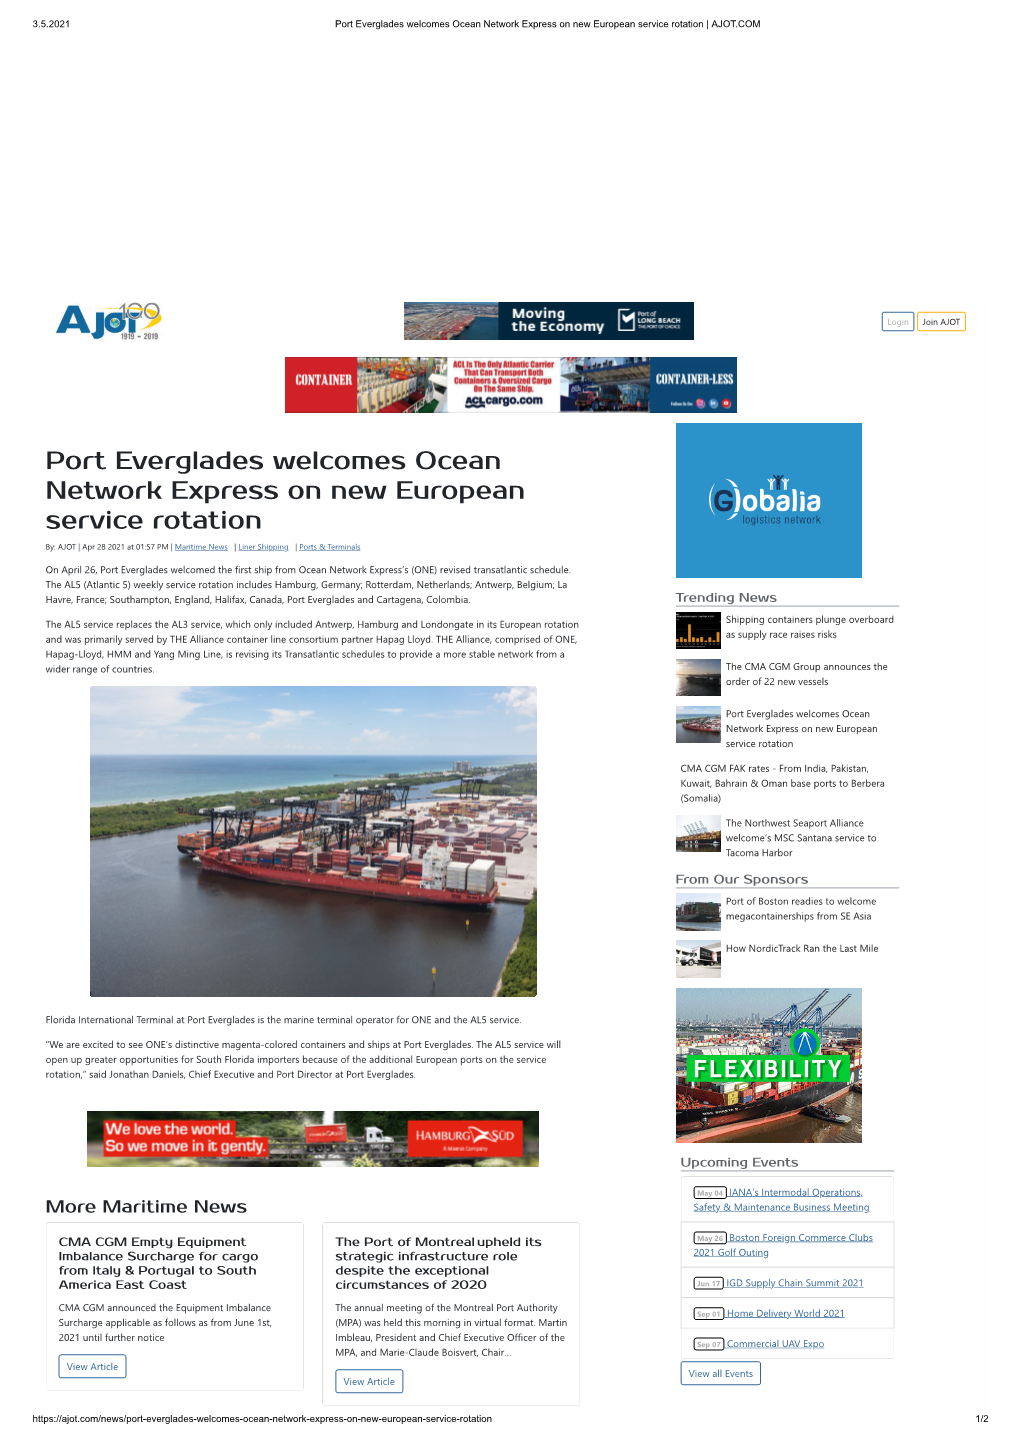 Port Everglades Welcomes Ocean Network Express on New European Service Rotation | AJOT.COM ""